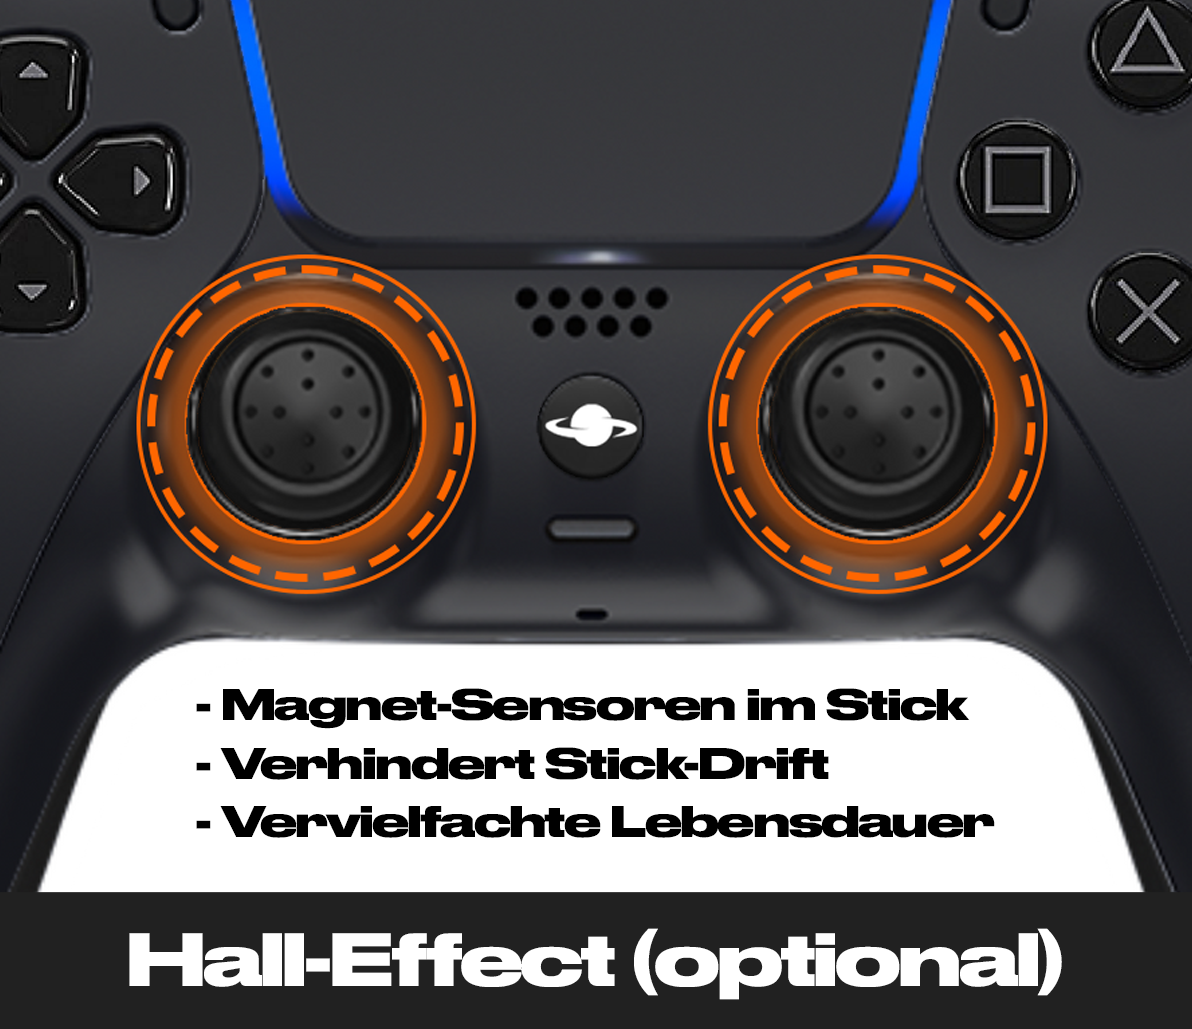 PS5 Custom Controller 'Auge der Schlange'